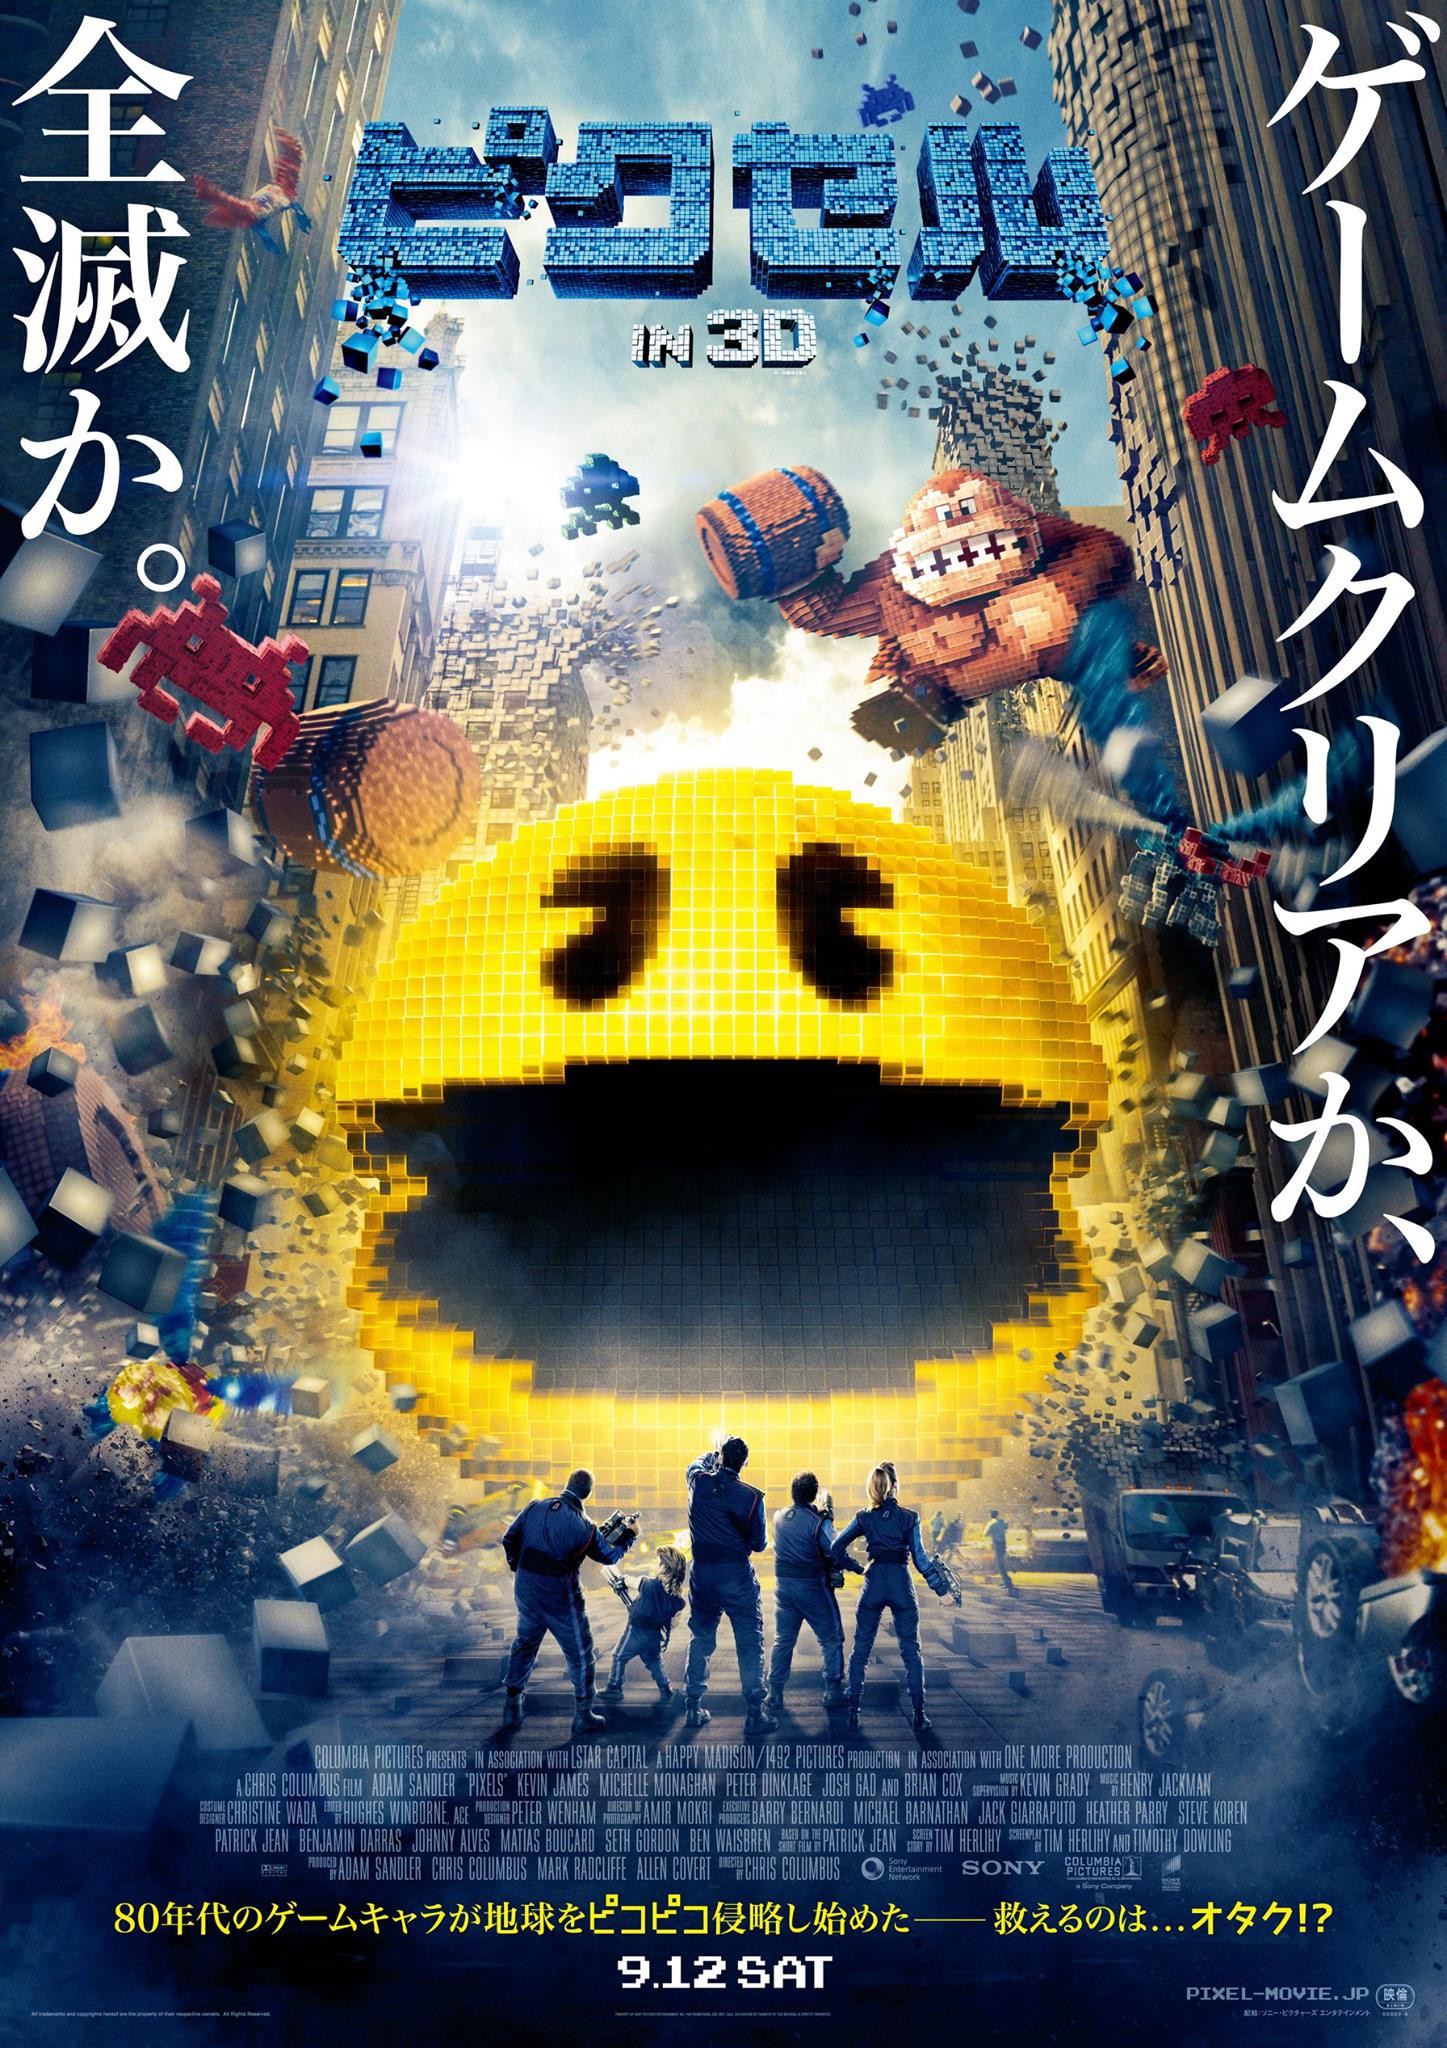 Mega Sized Movie Poster Image for Pixels (#7 of 10)